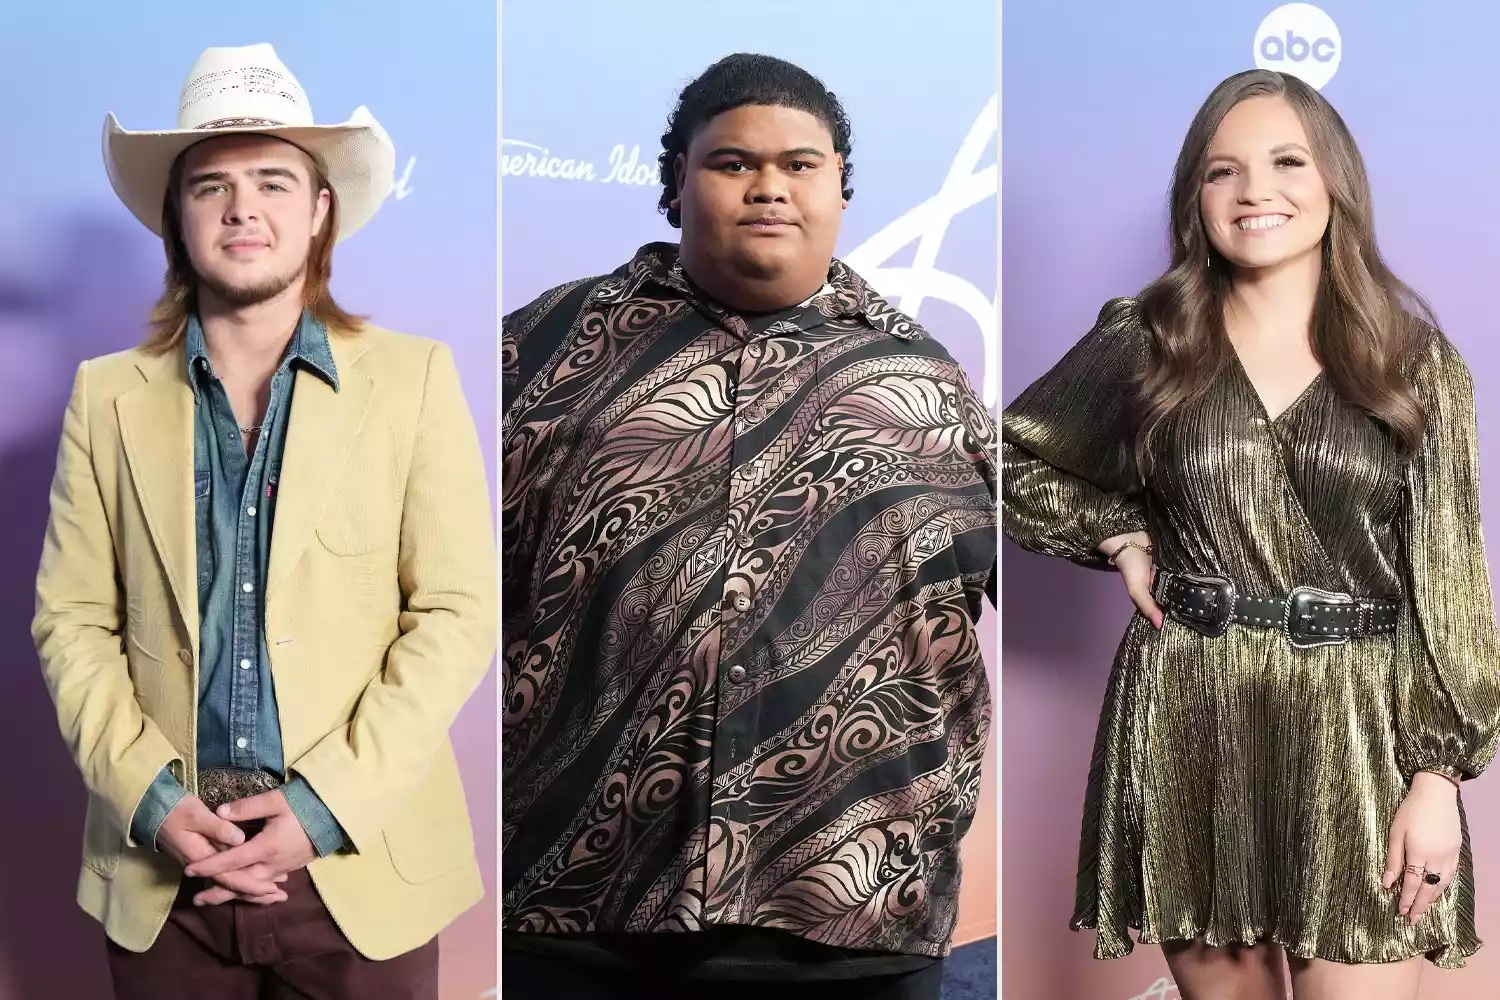 BREAKING 'American Idol' Winner Has Been Announced Small Joys